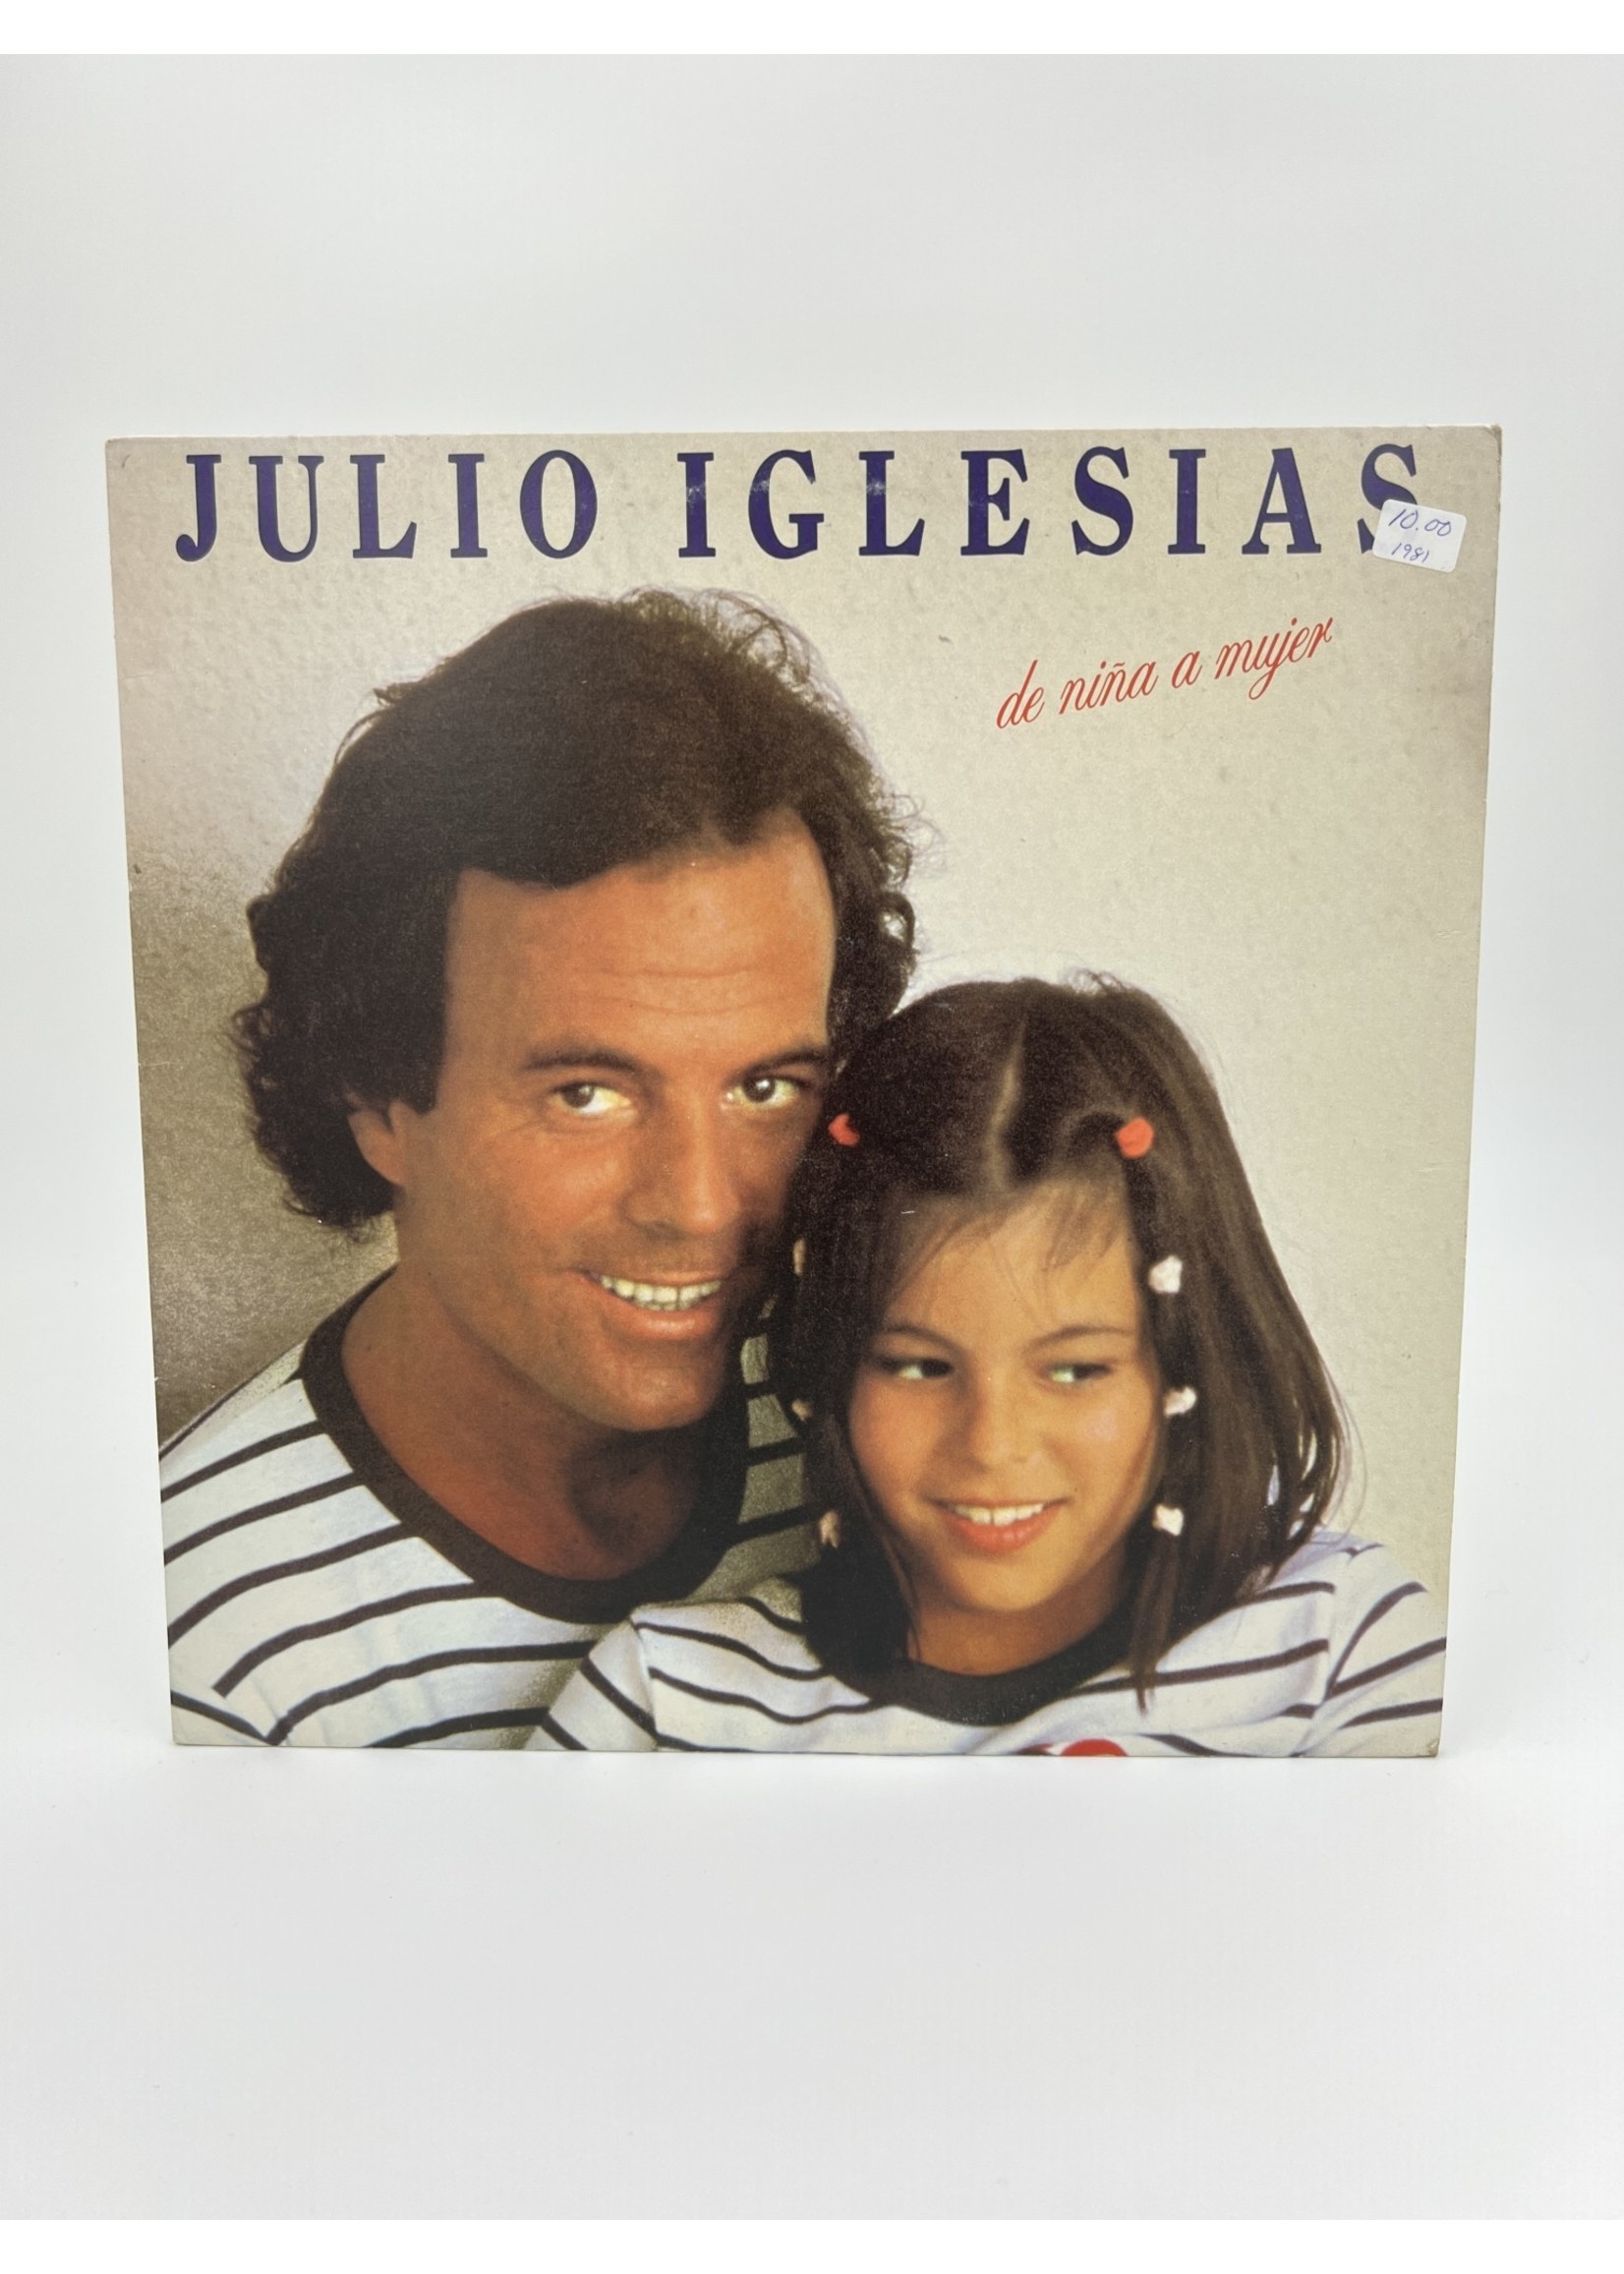 LP Julio Iglesias De Nina A Mujer LP RECORD